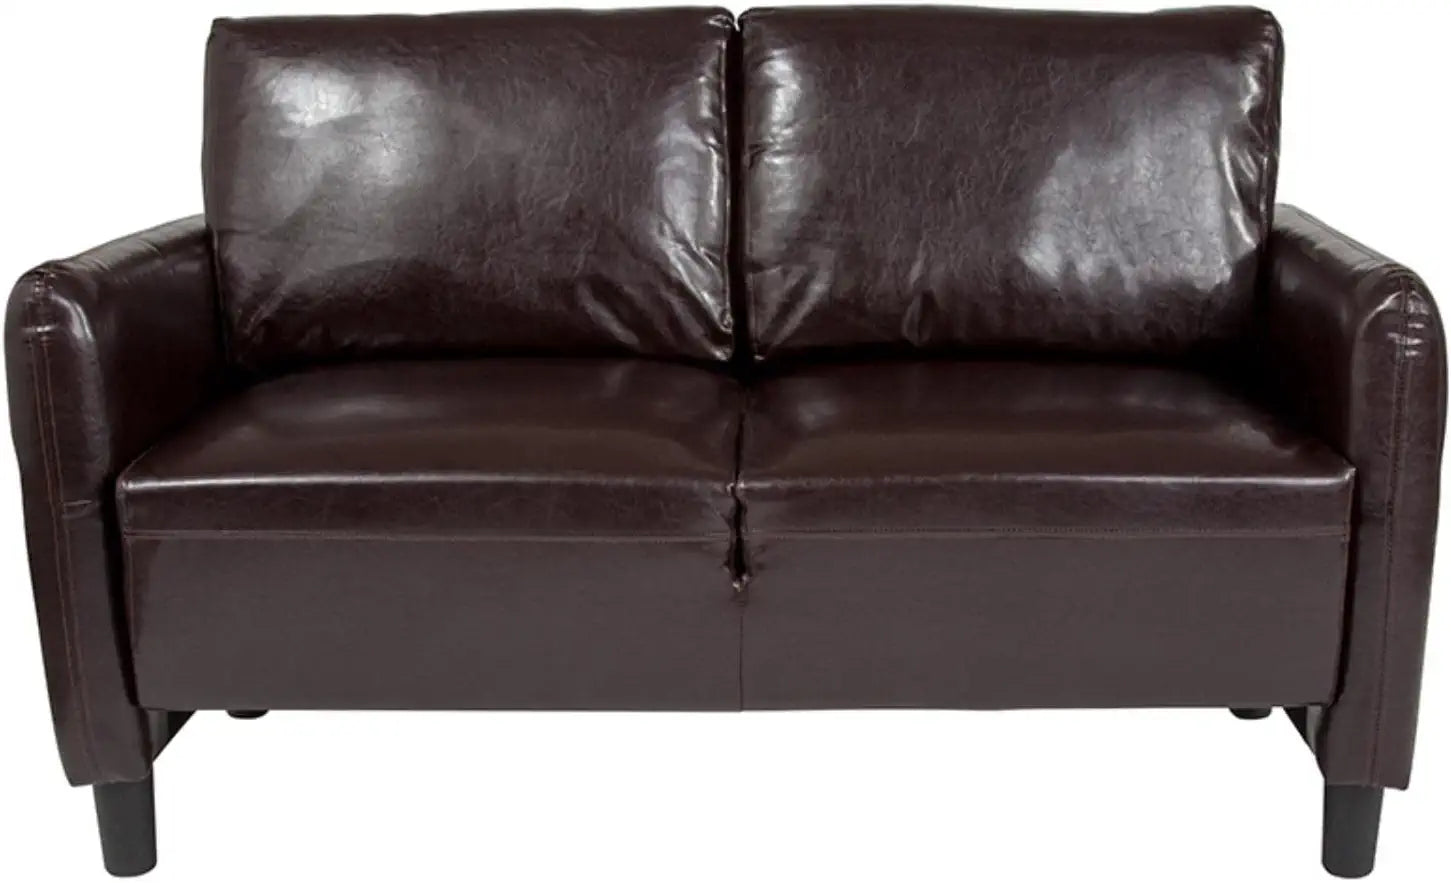 Flash Furniture Brown Leather Loveseat